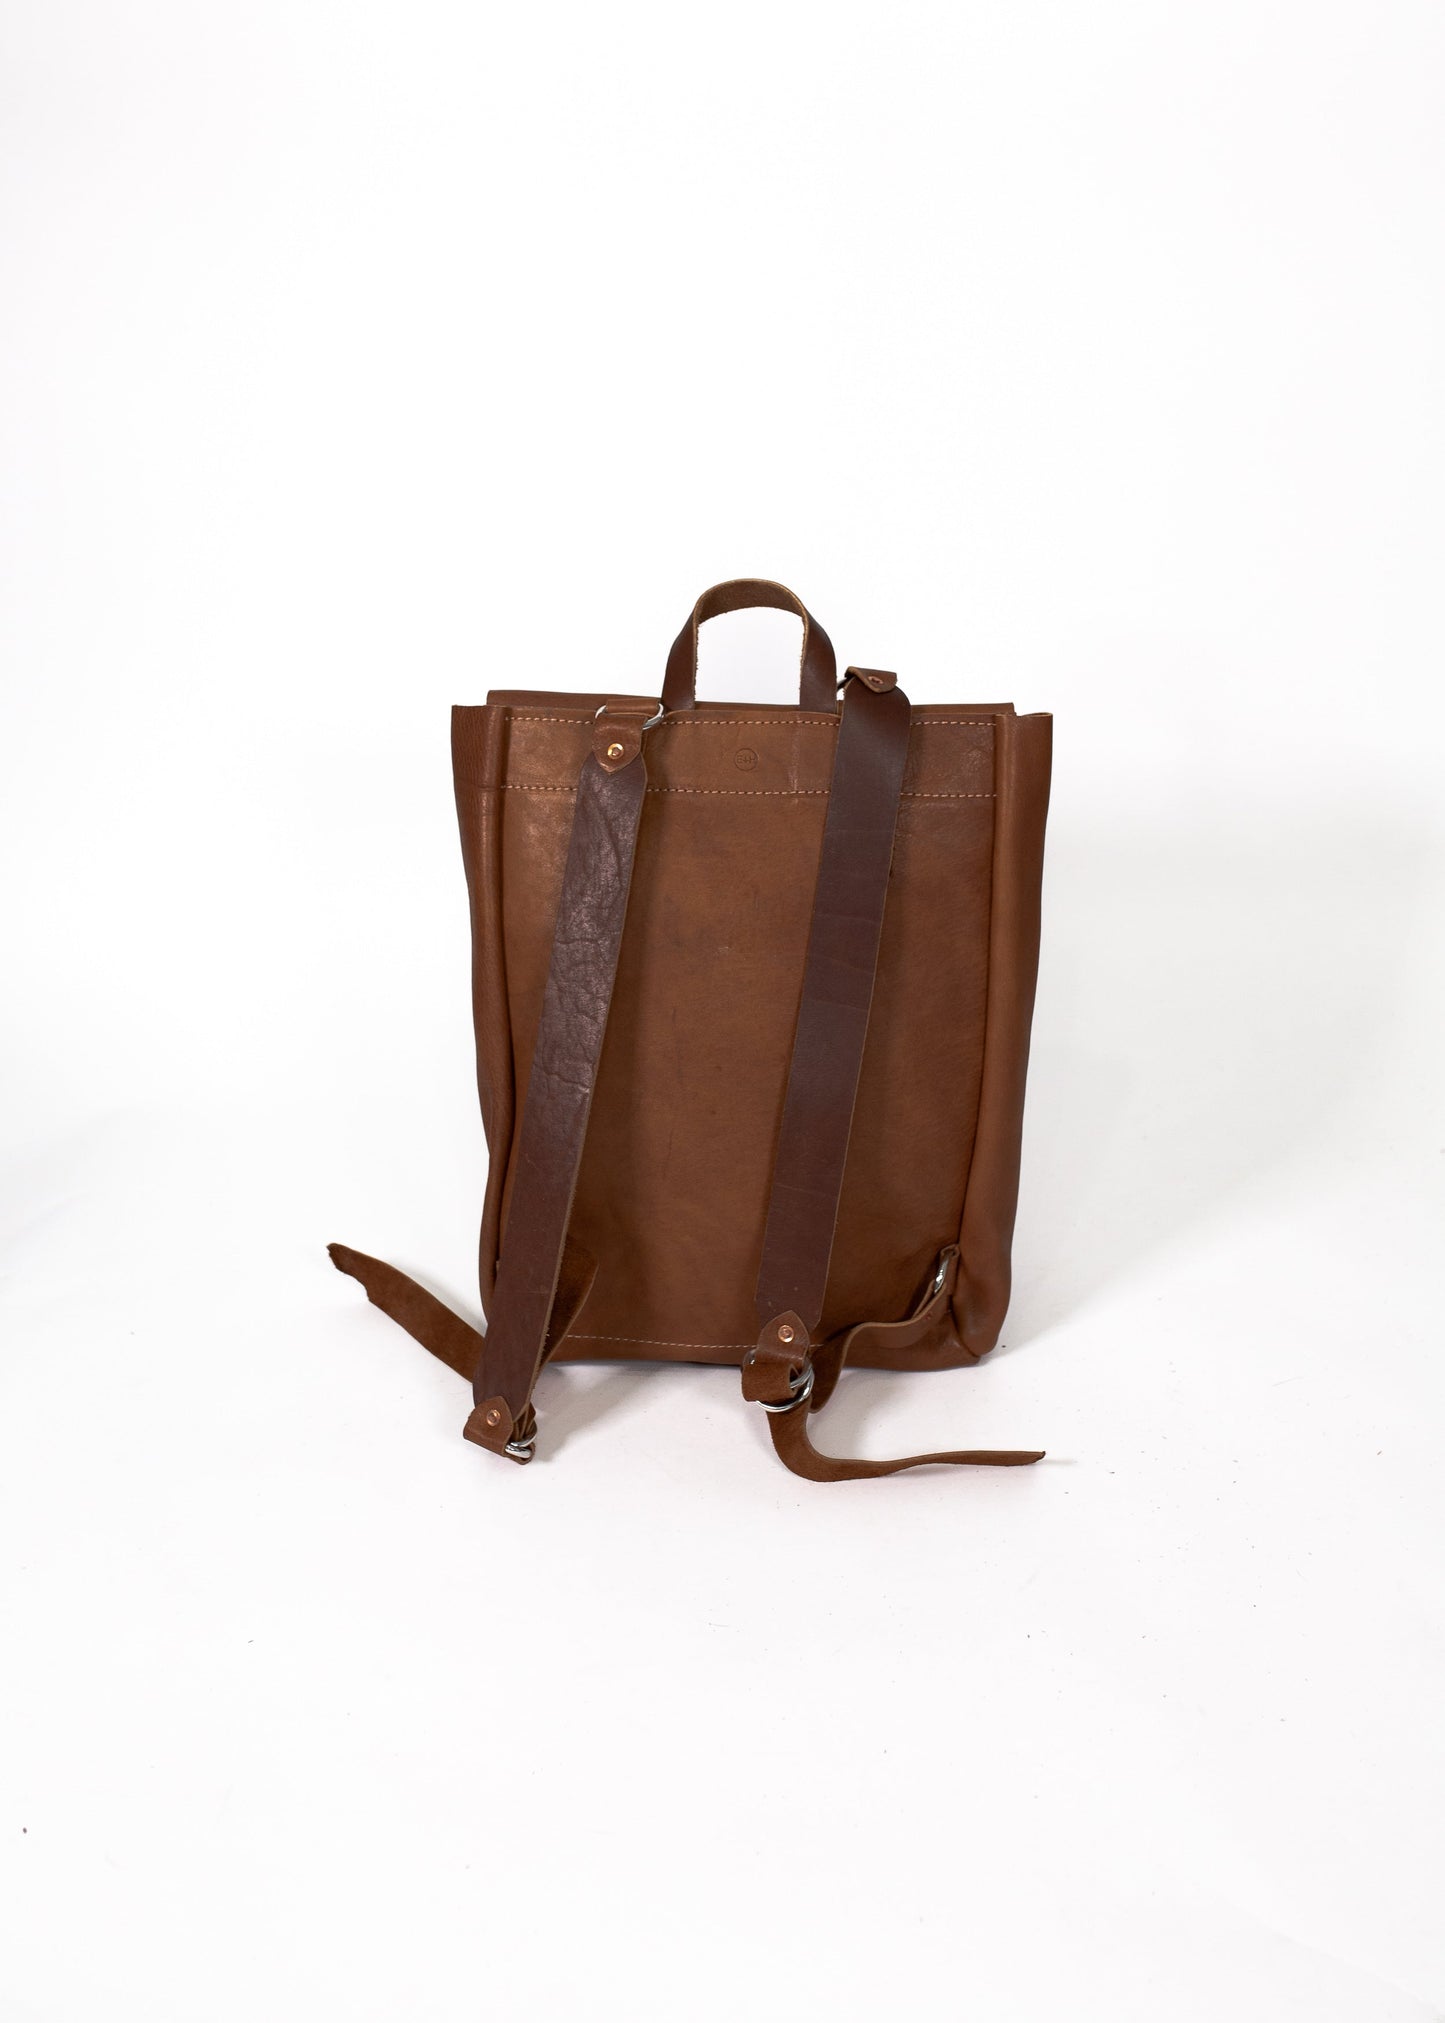 Jackson Backpack - Wholesale